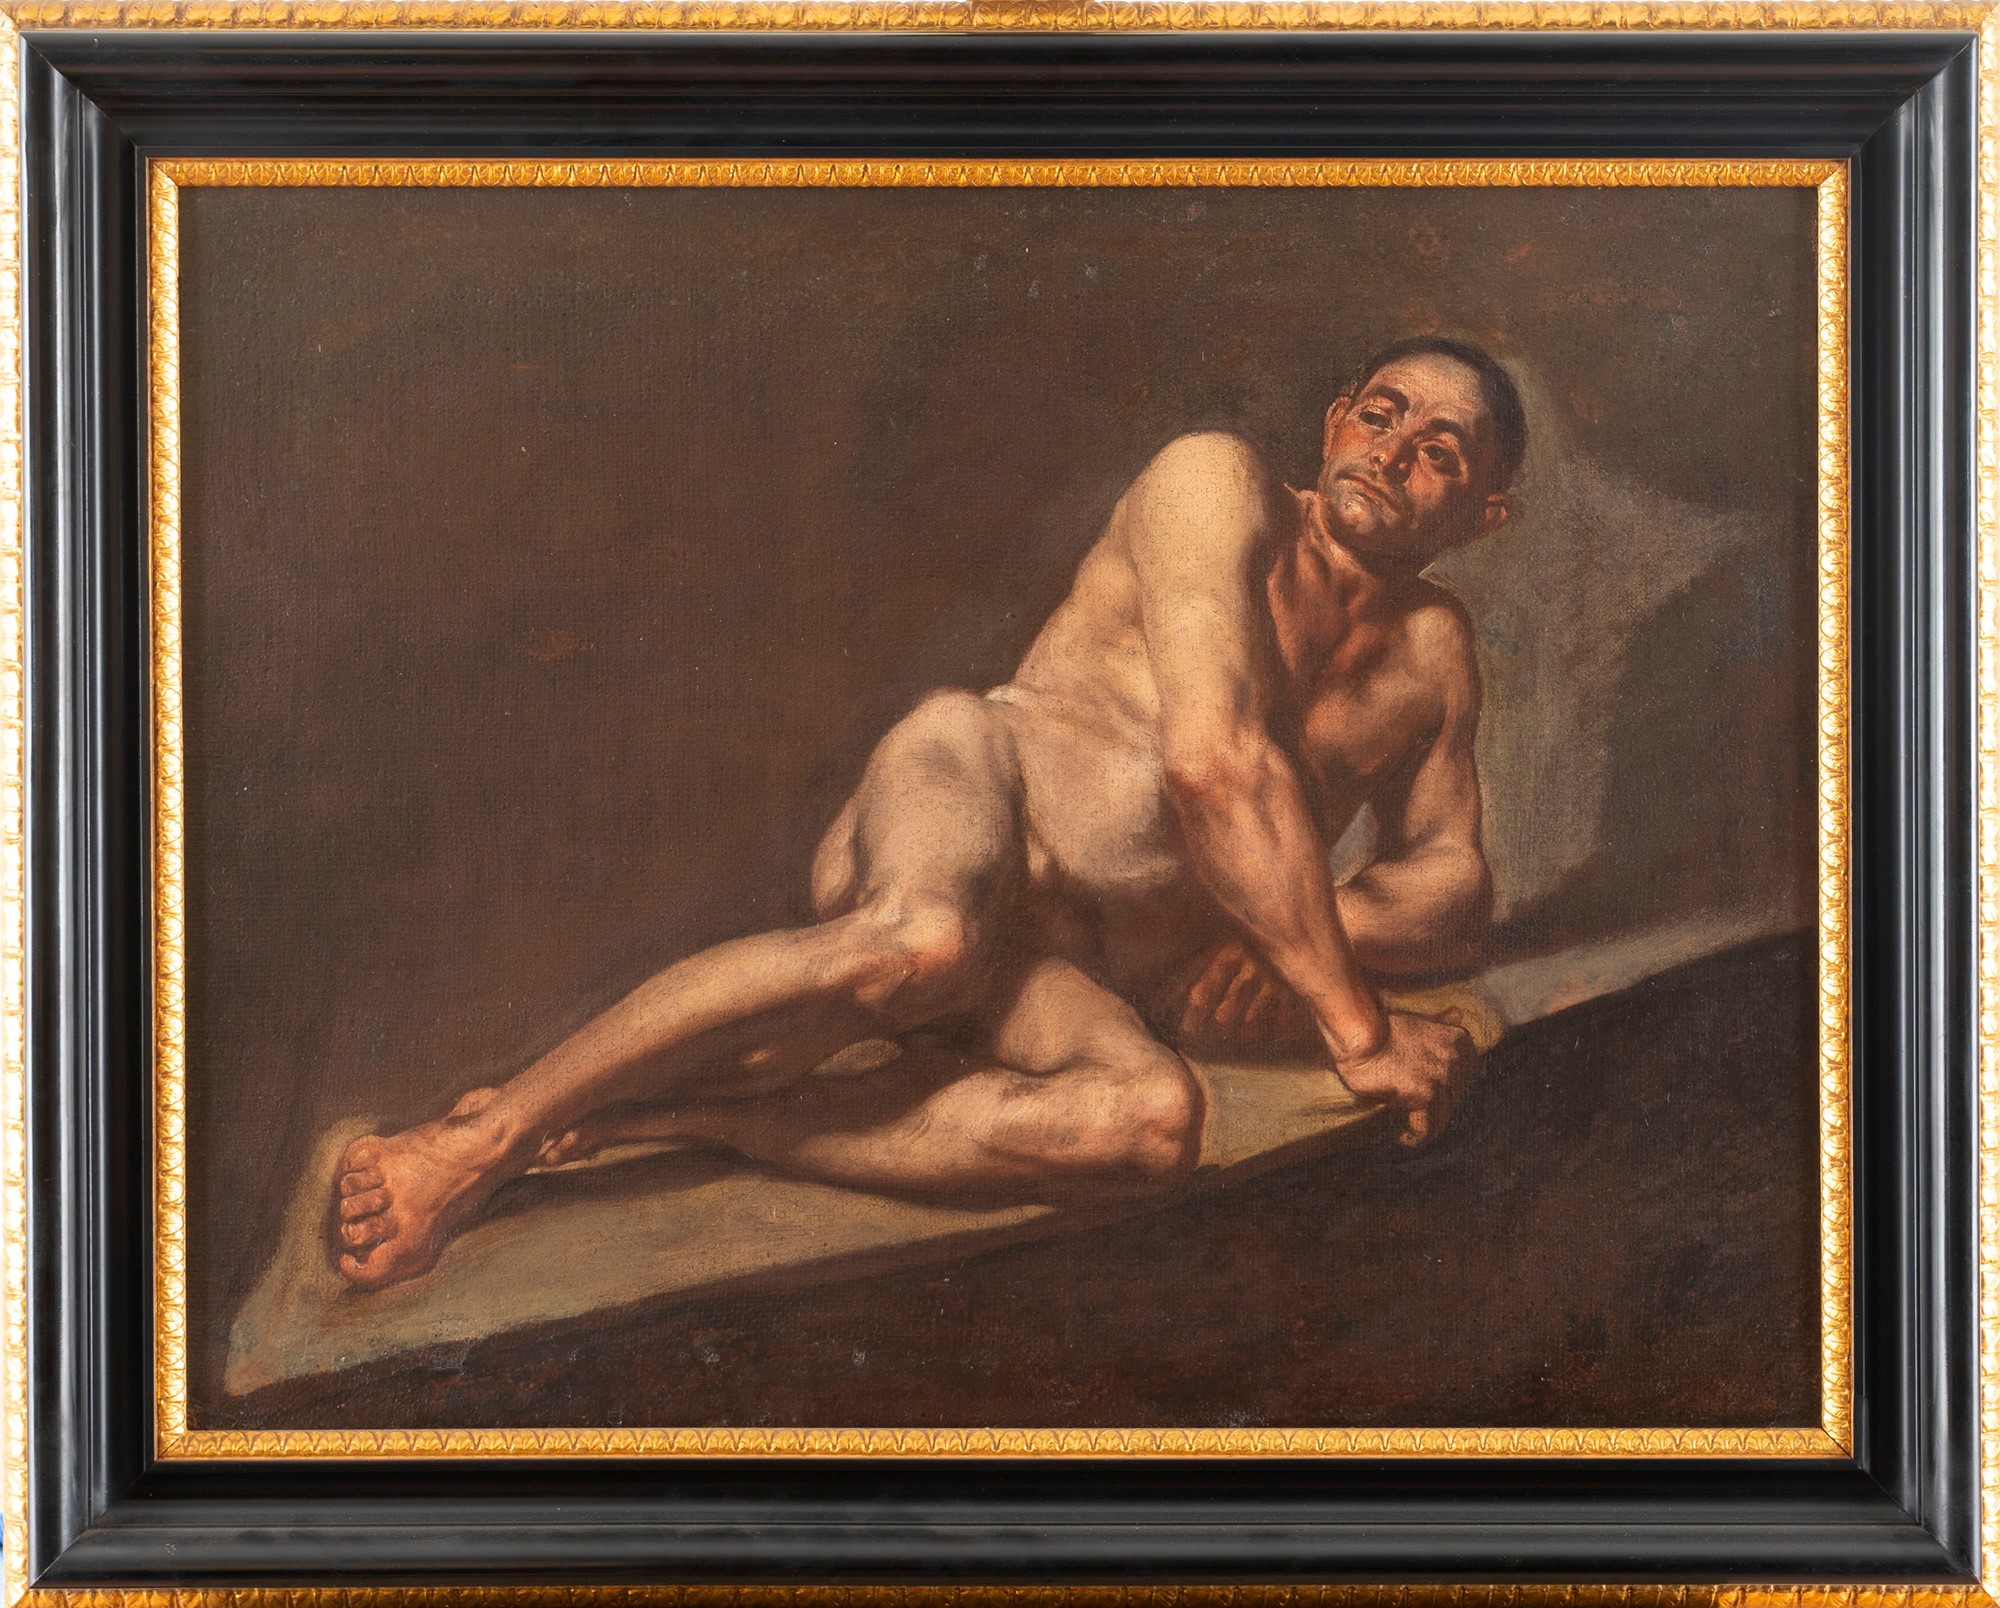 Neapolitan school, eighteenth century - Study of a male nude - Image 2 of 3